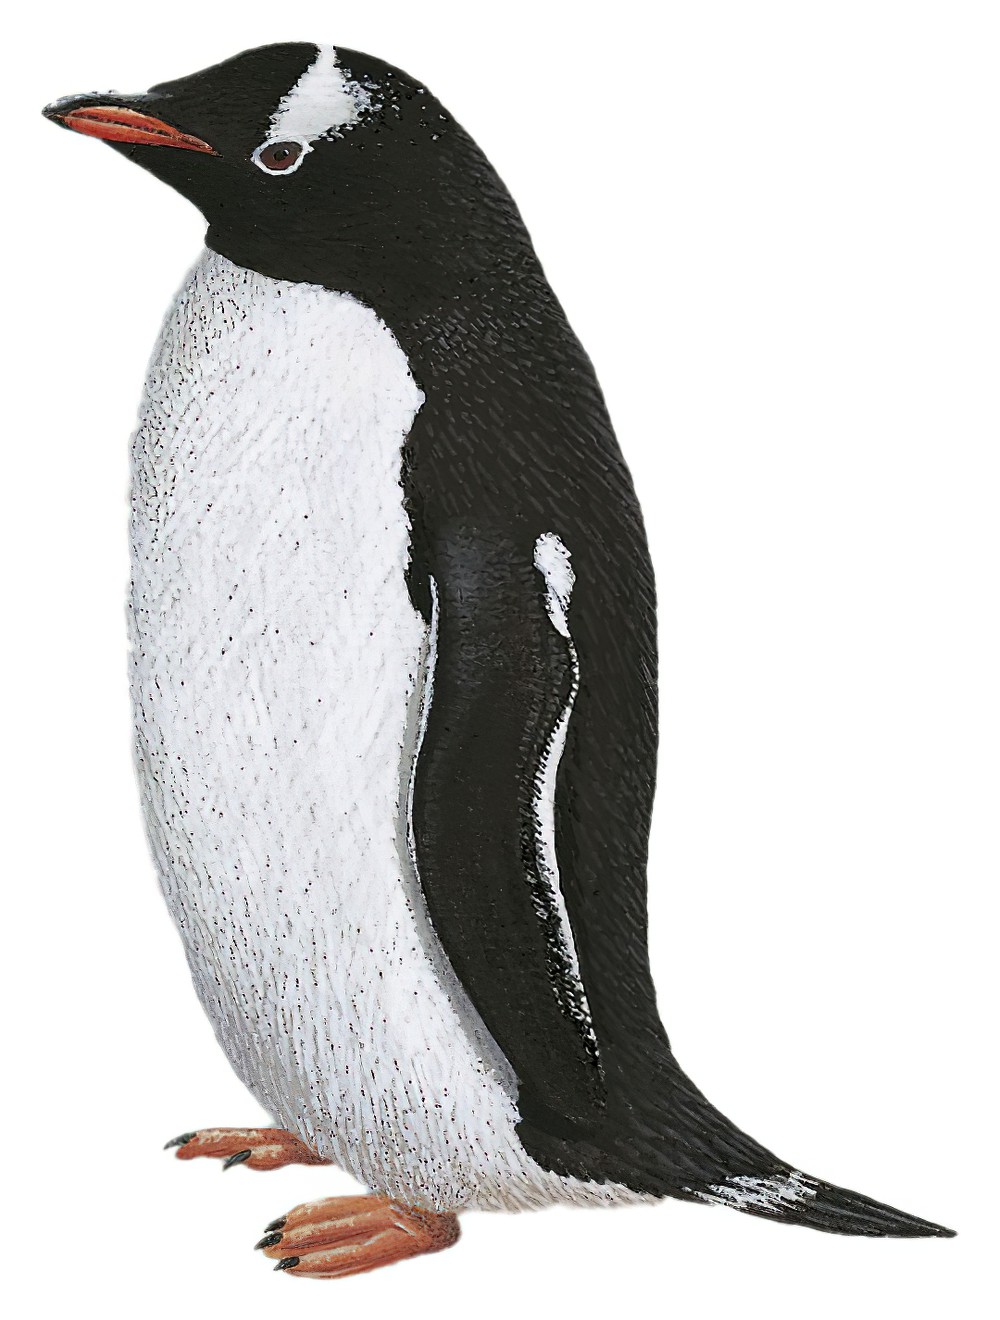 Gentoo Penguin / Pygoscelis papua